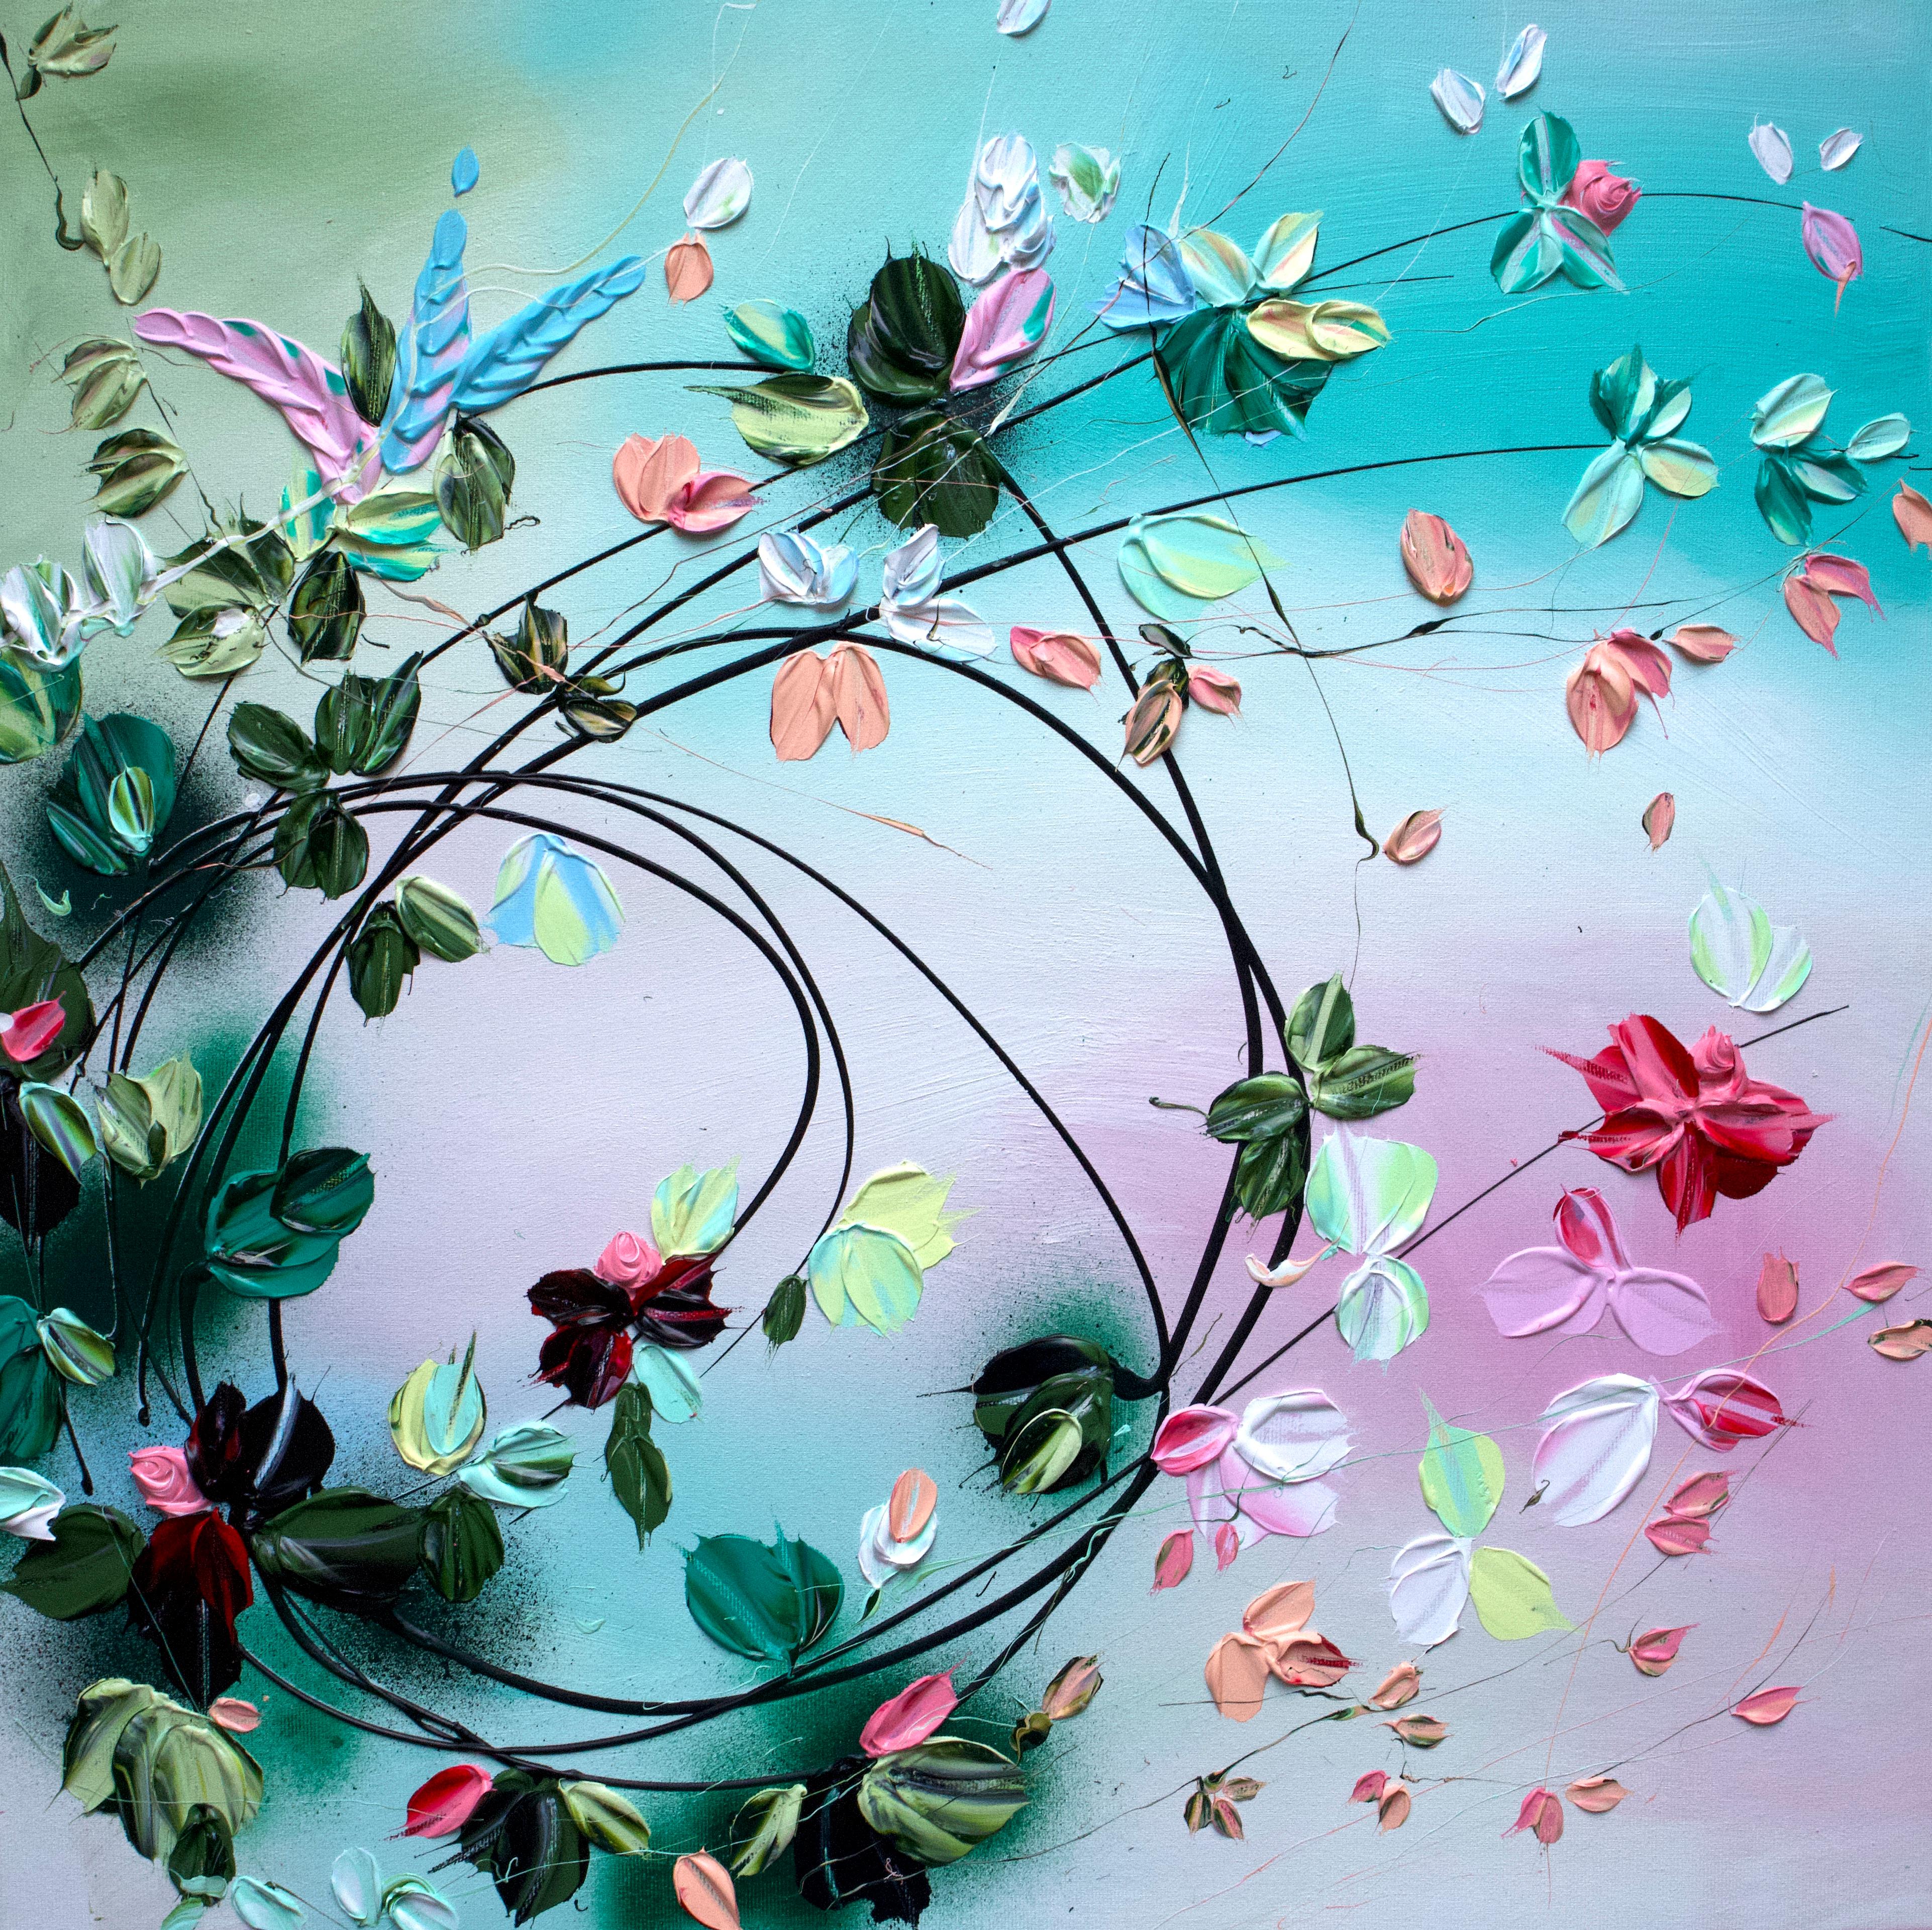 Abstract Painting Anastassia Skopp - Peinture florale texturée avec roses « improvisation »